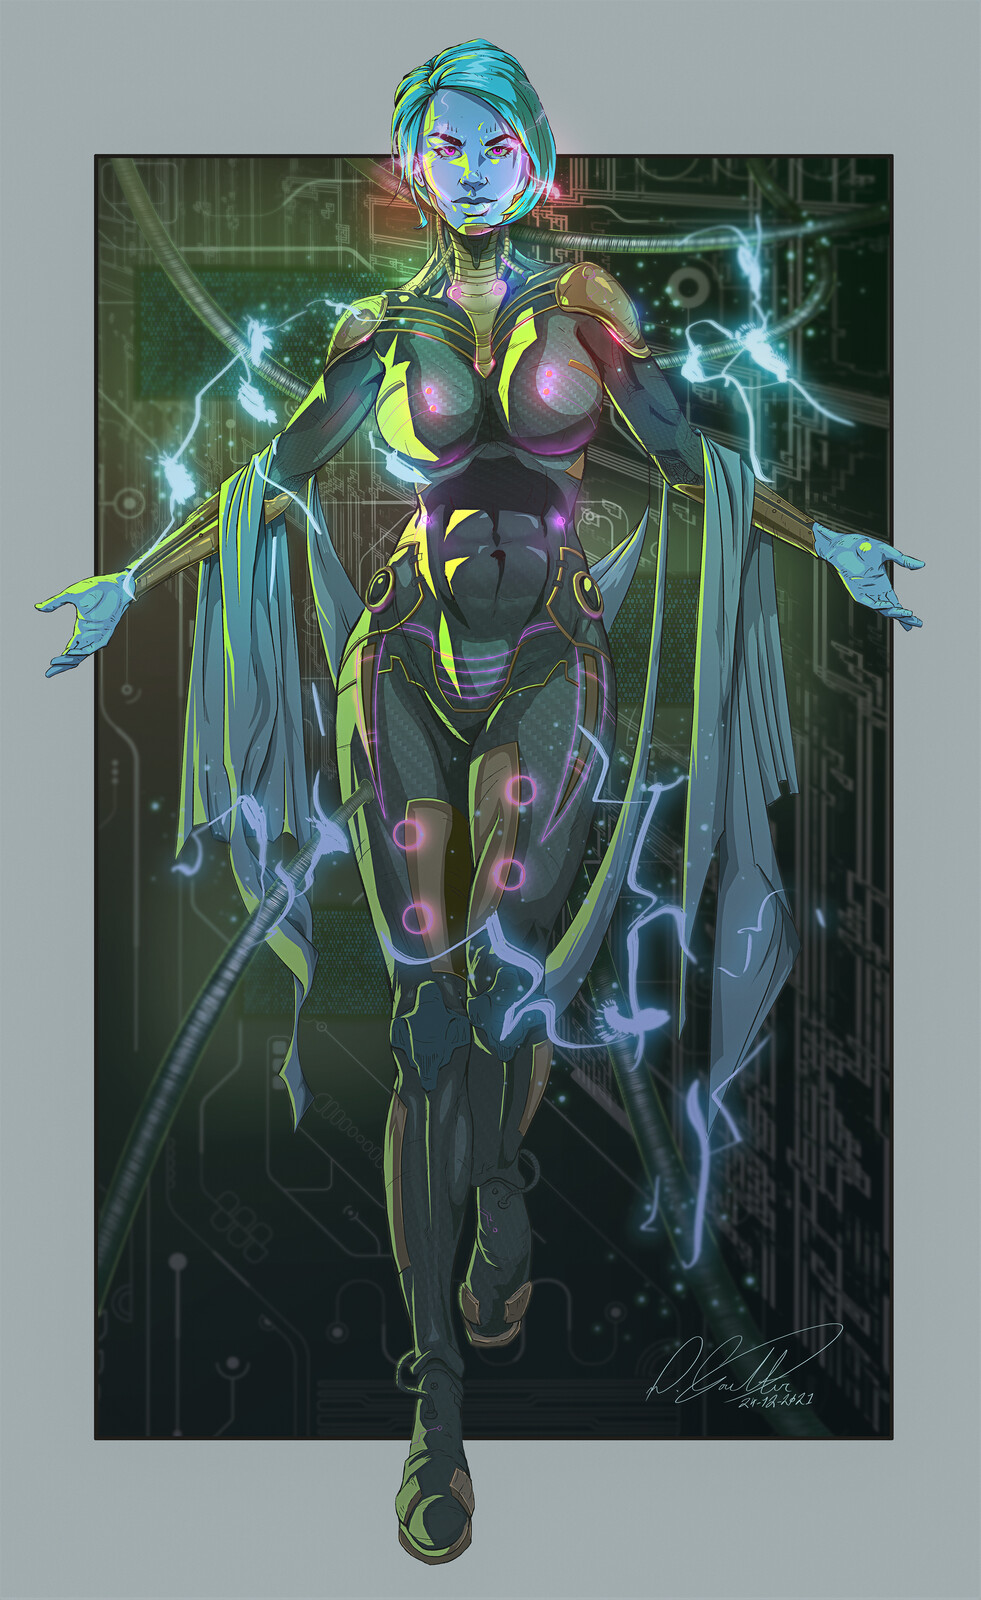 A cyberpunk priestess type character I made.